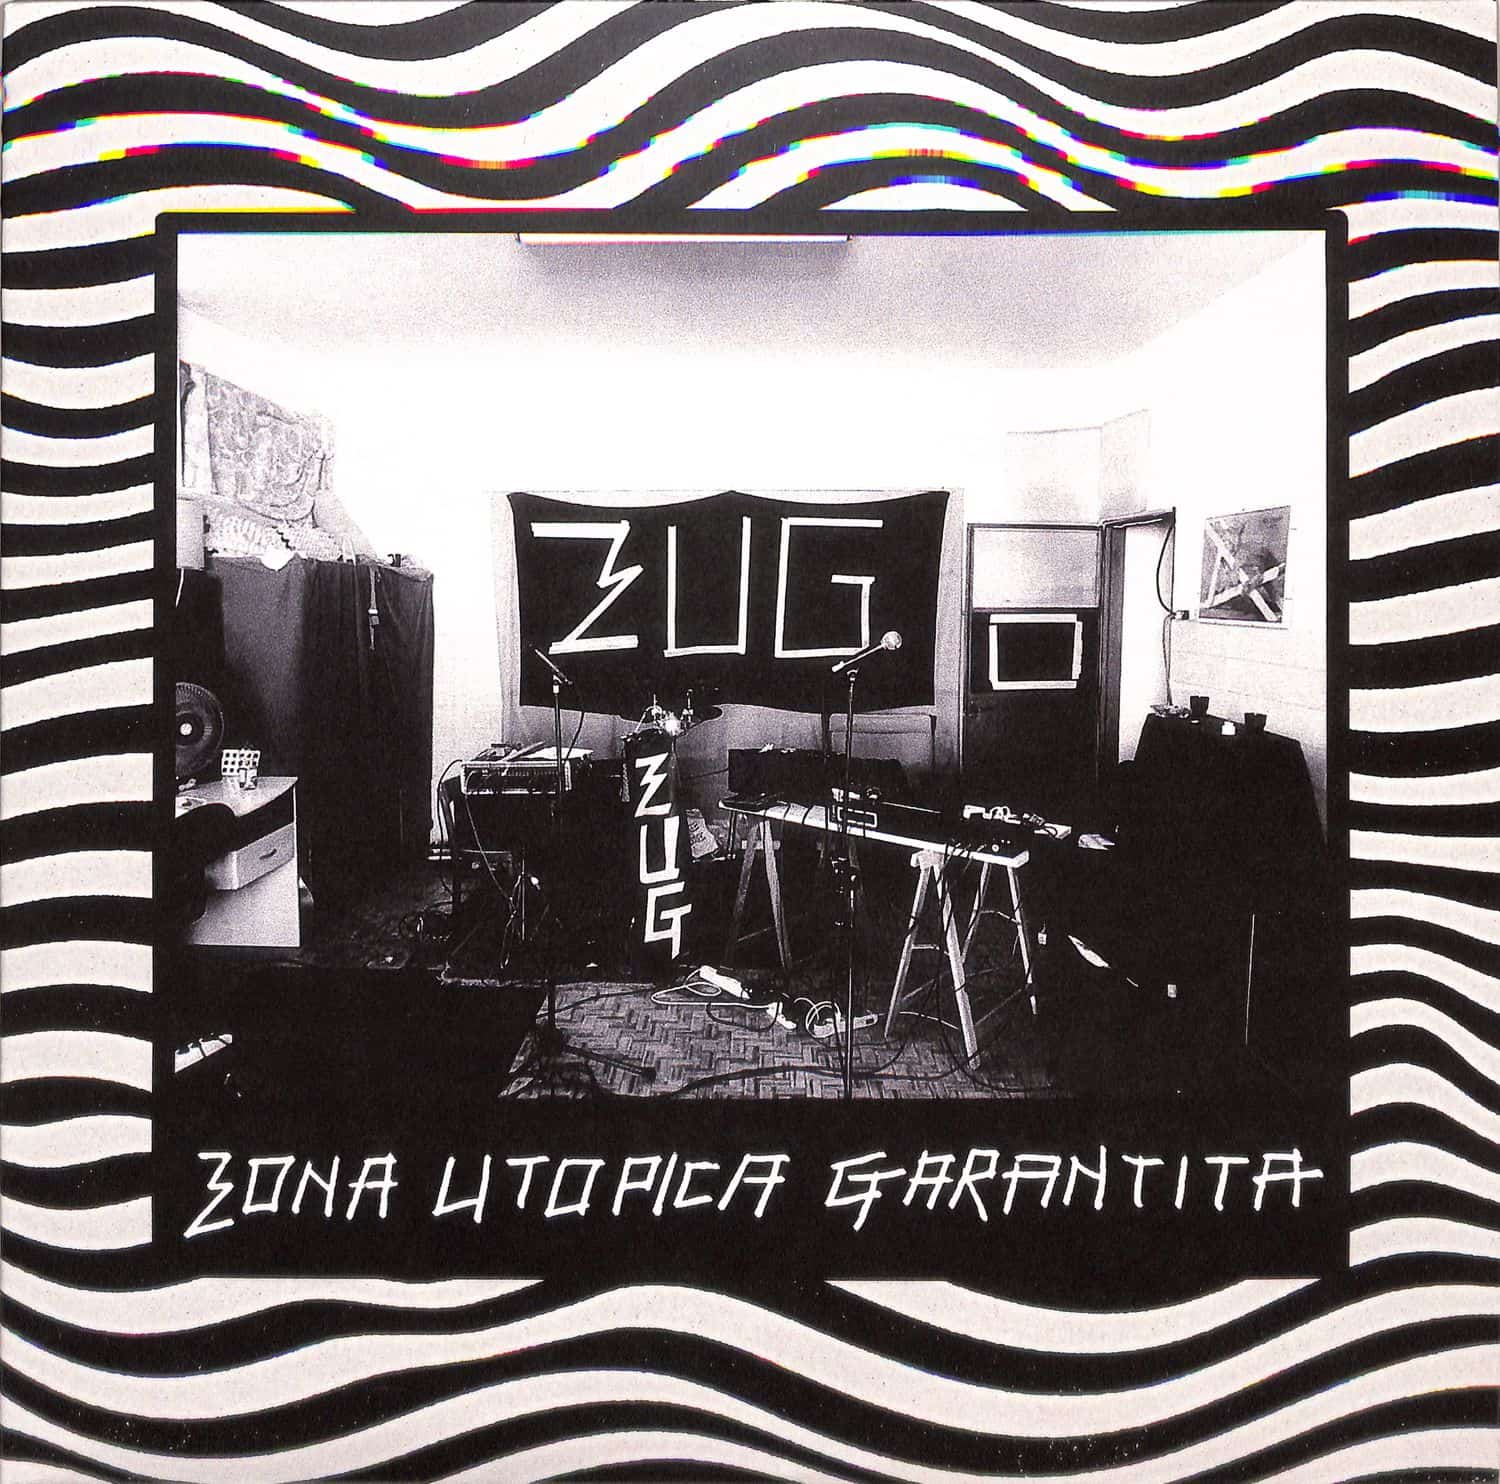 Zona Utopica Garantita - ZUG! ZUG! ZUG! EP